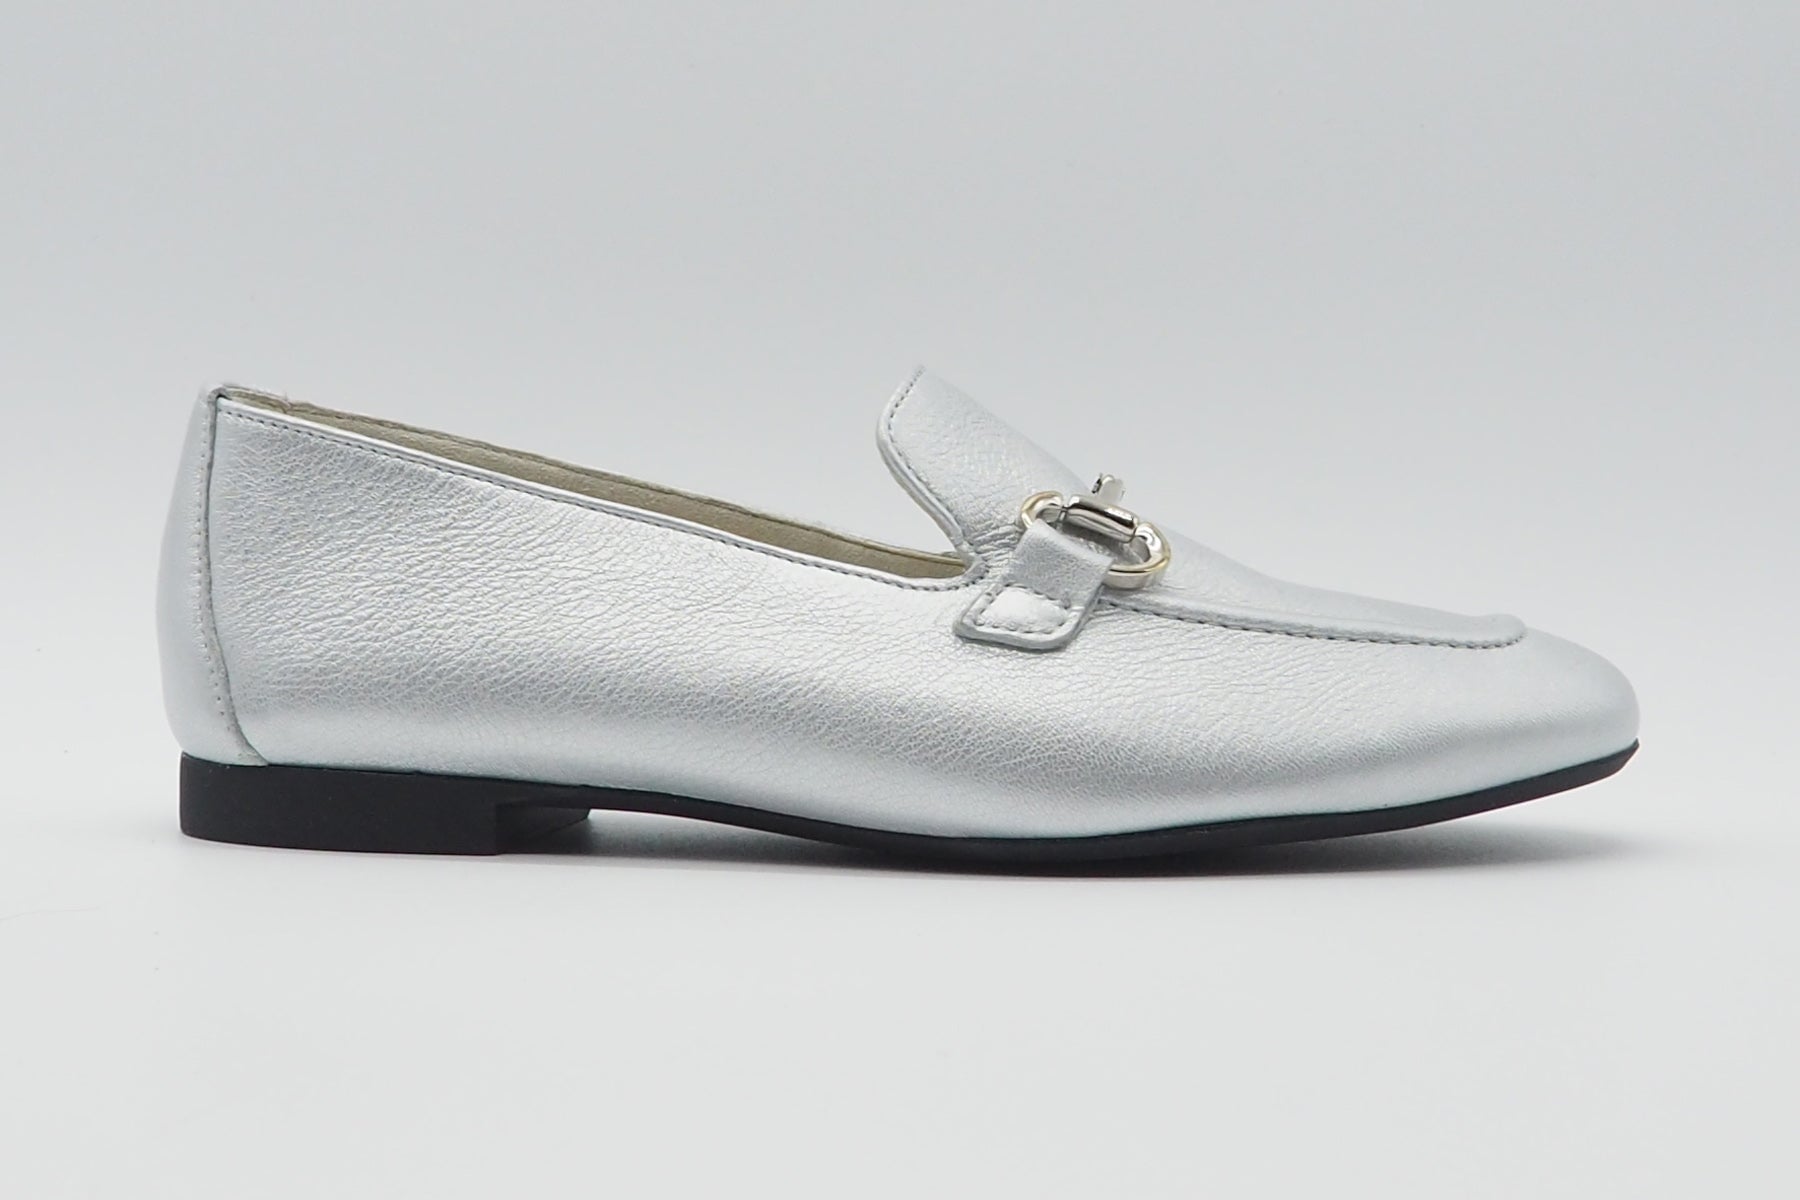 Edle Damen Loafer aus Metallicleder in Silber - Absatz 1,5cm Damen Loafers & Schnürer Paul Green 